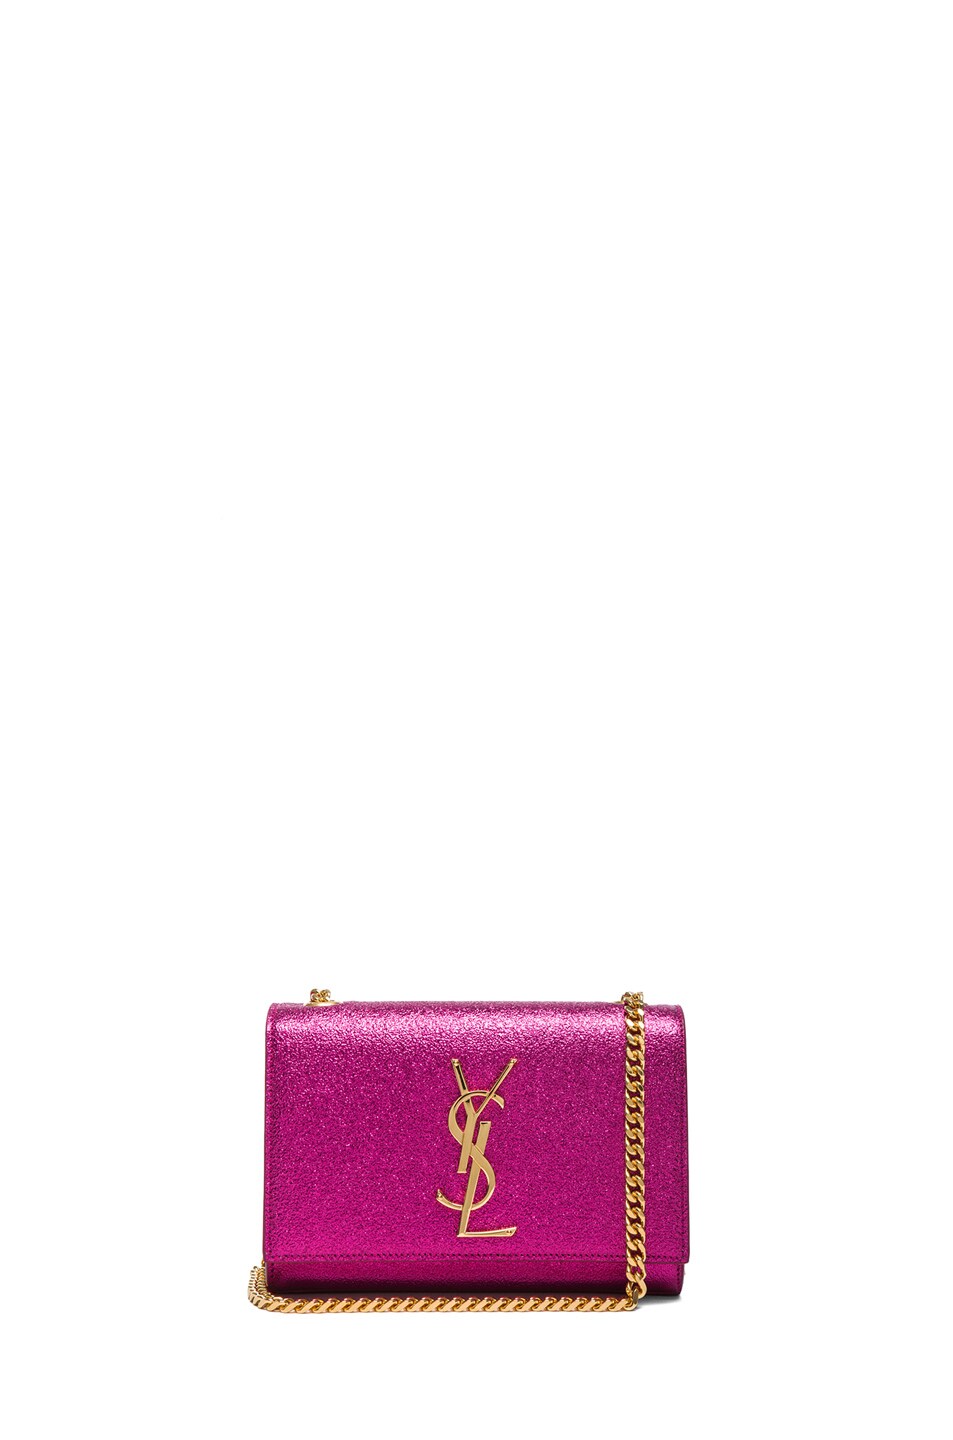 Image 1 of Saint Laurent Small Monogramme Chain Bag in Metallic Pink